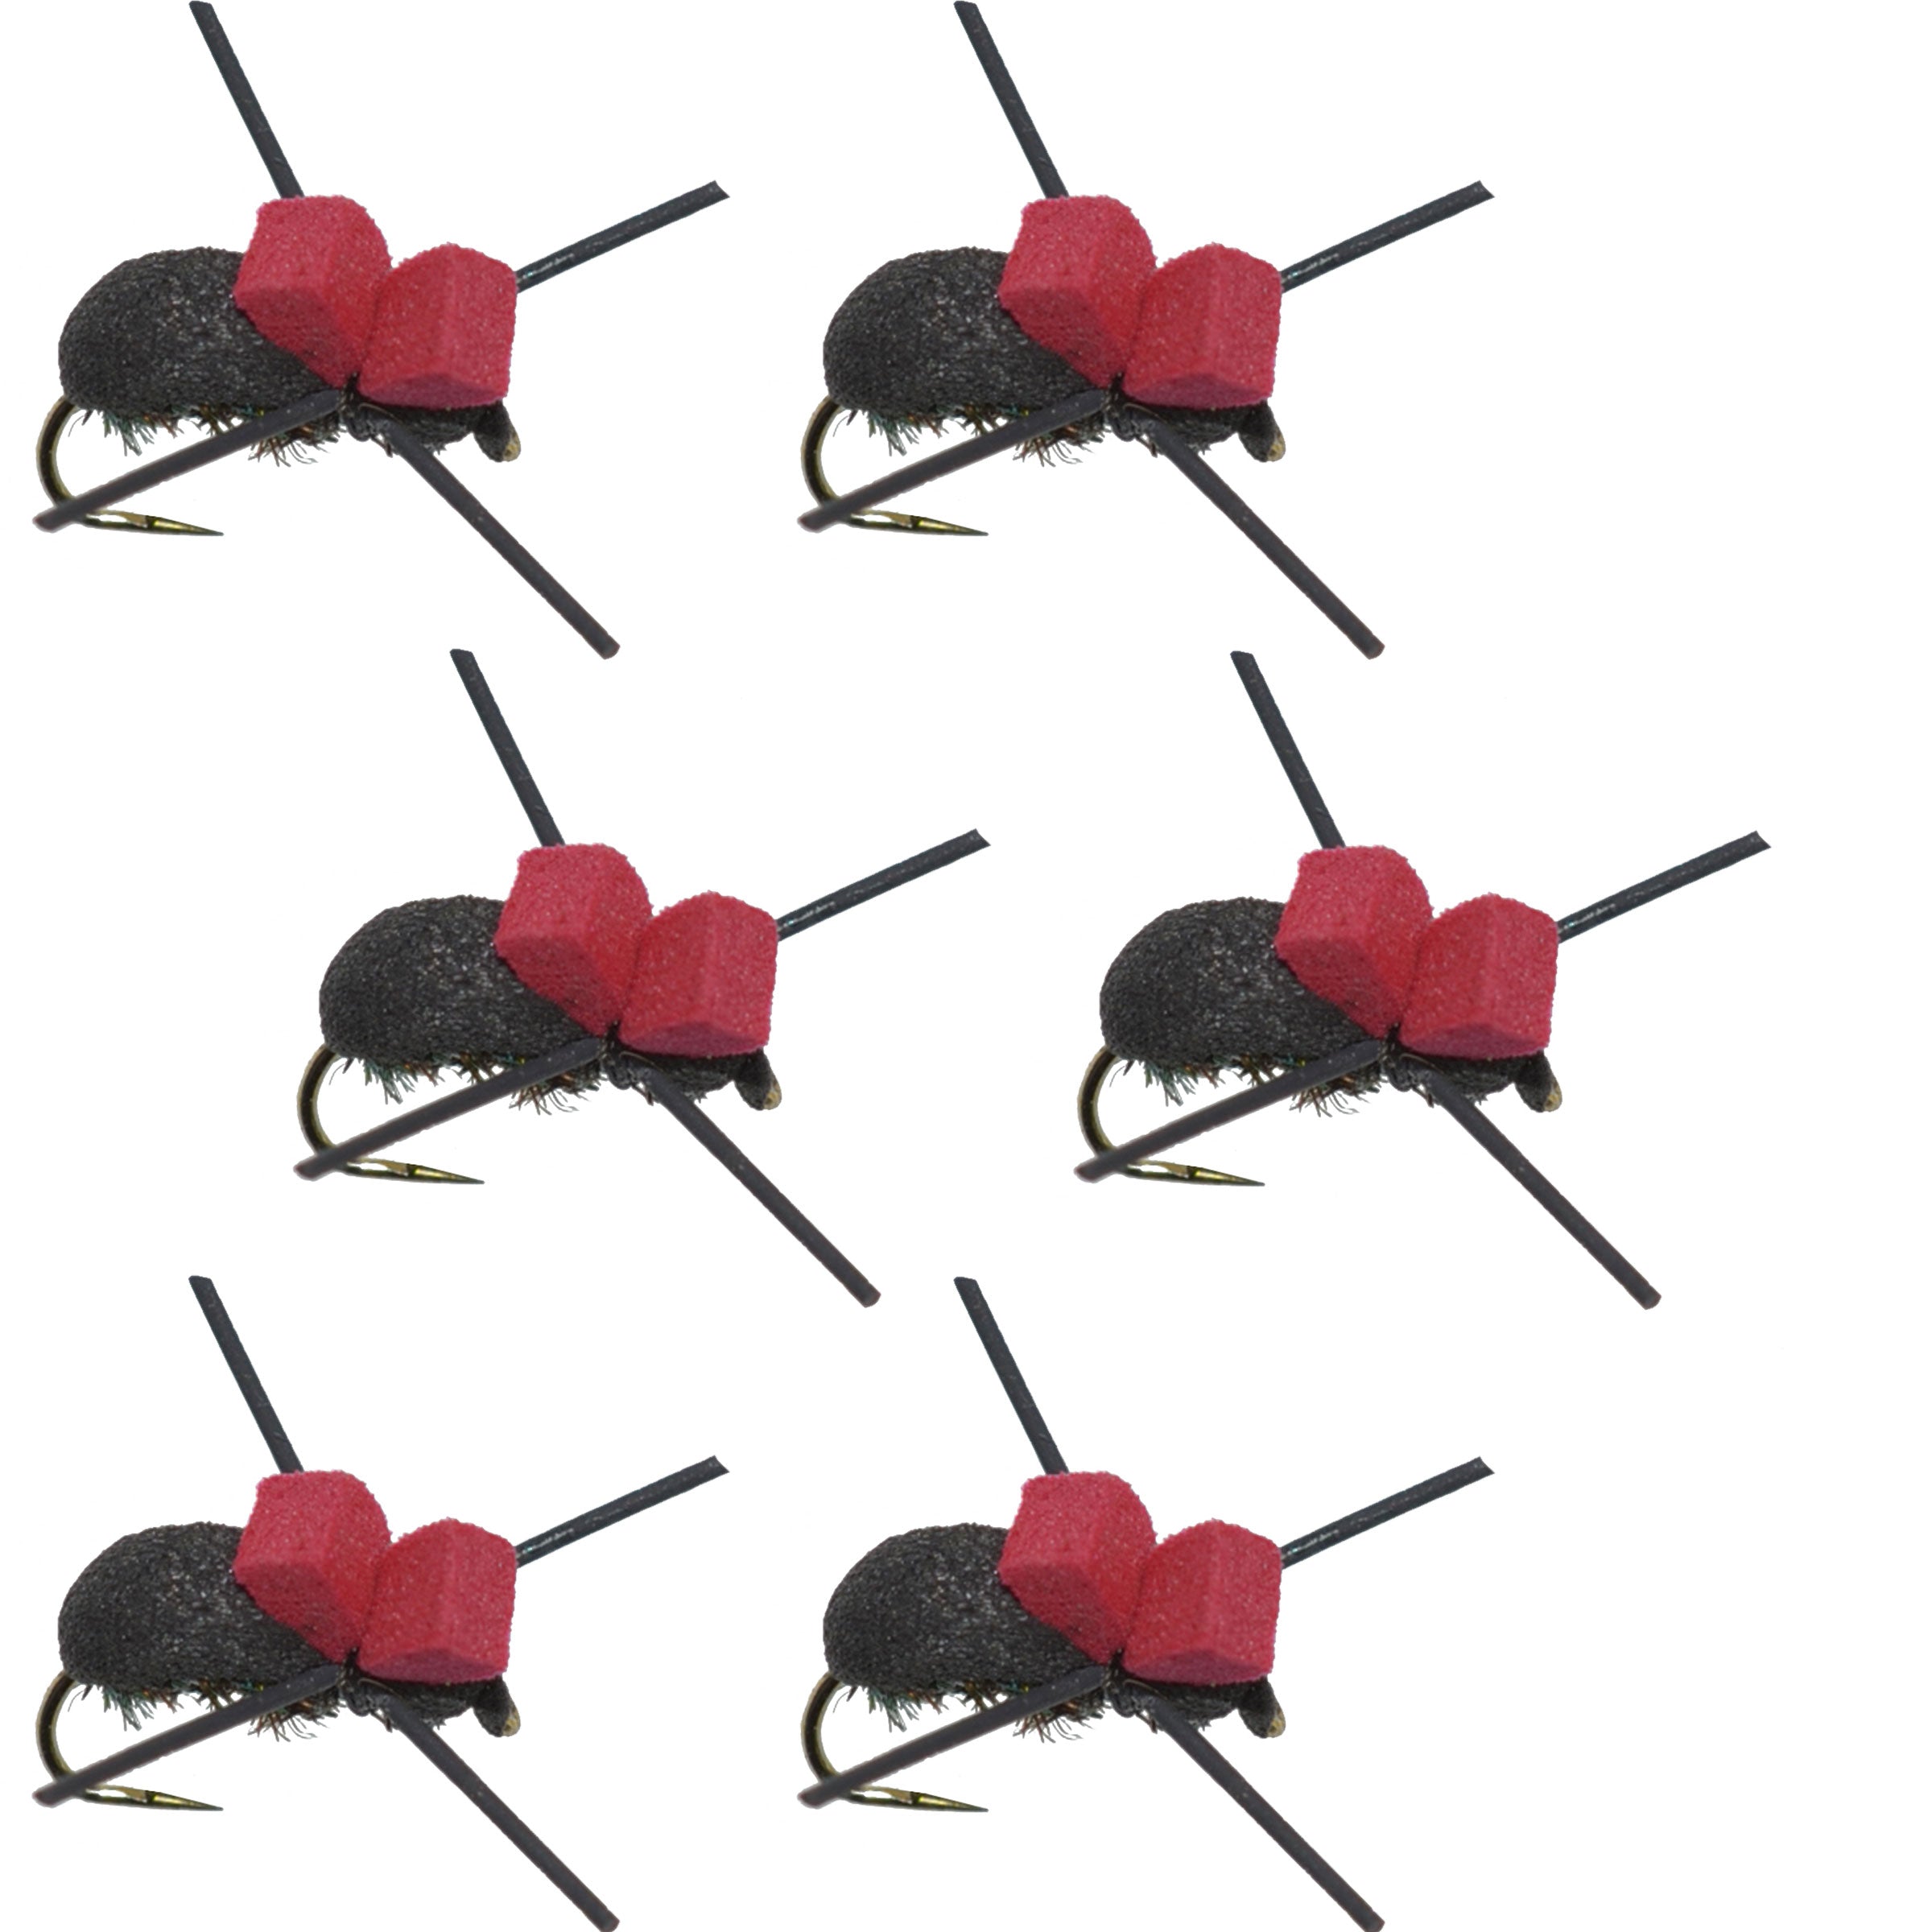 Barbless Red Top Black Foam Beetle Terrestrial Trout Dry Fly Fishing Flies - 6 Flies Size 14